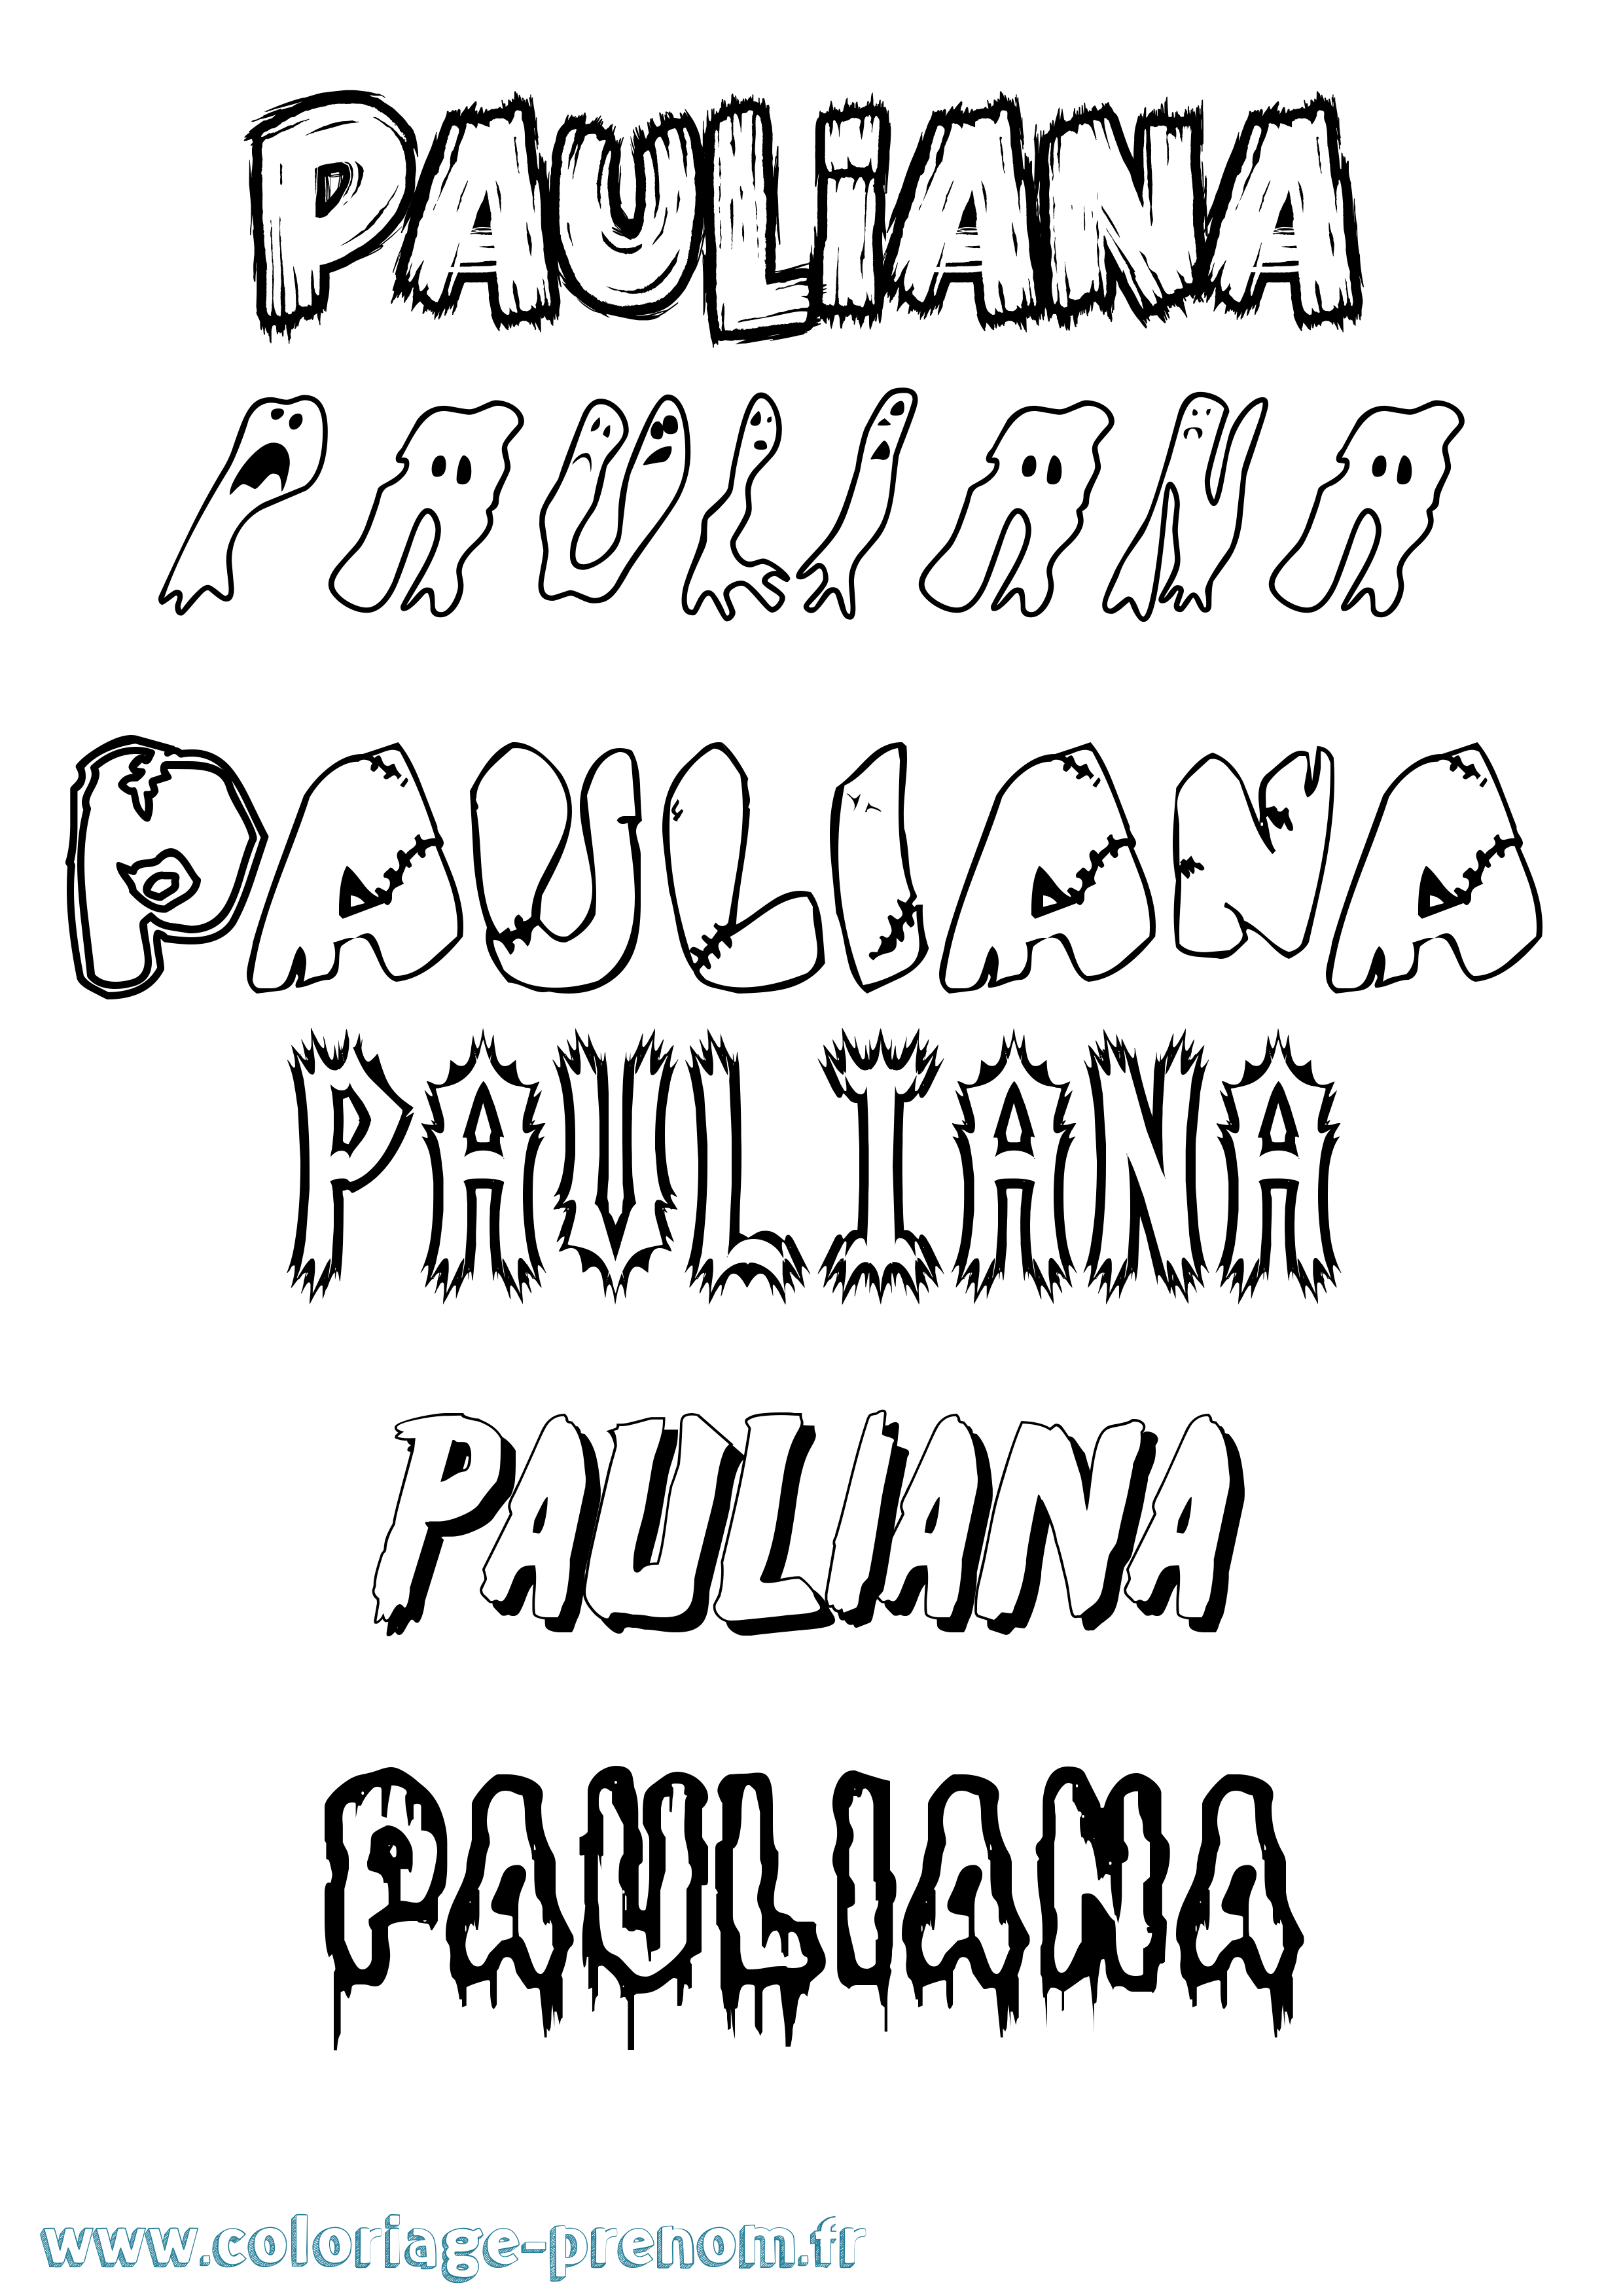 Coloriage prénom Pauliana Frisson